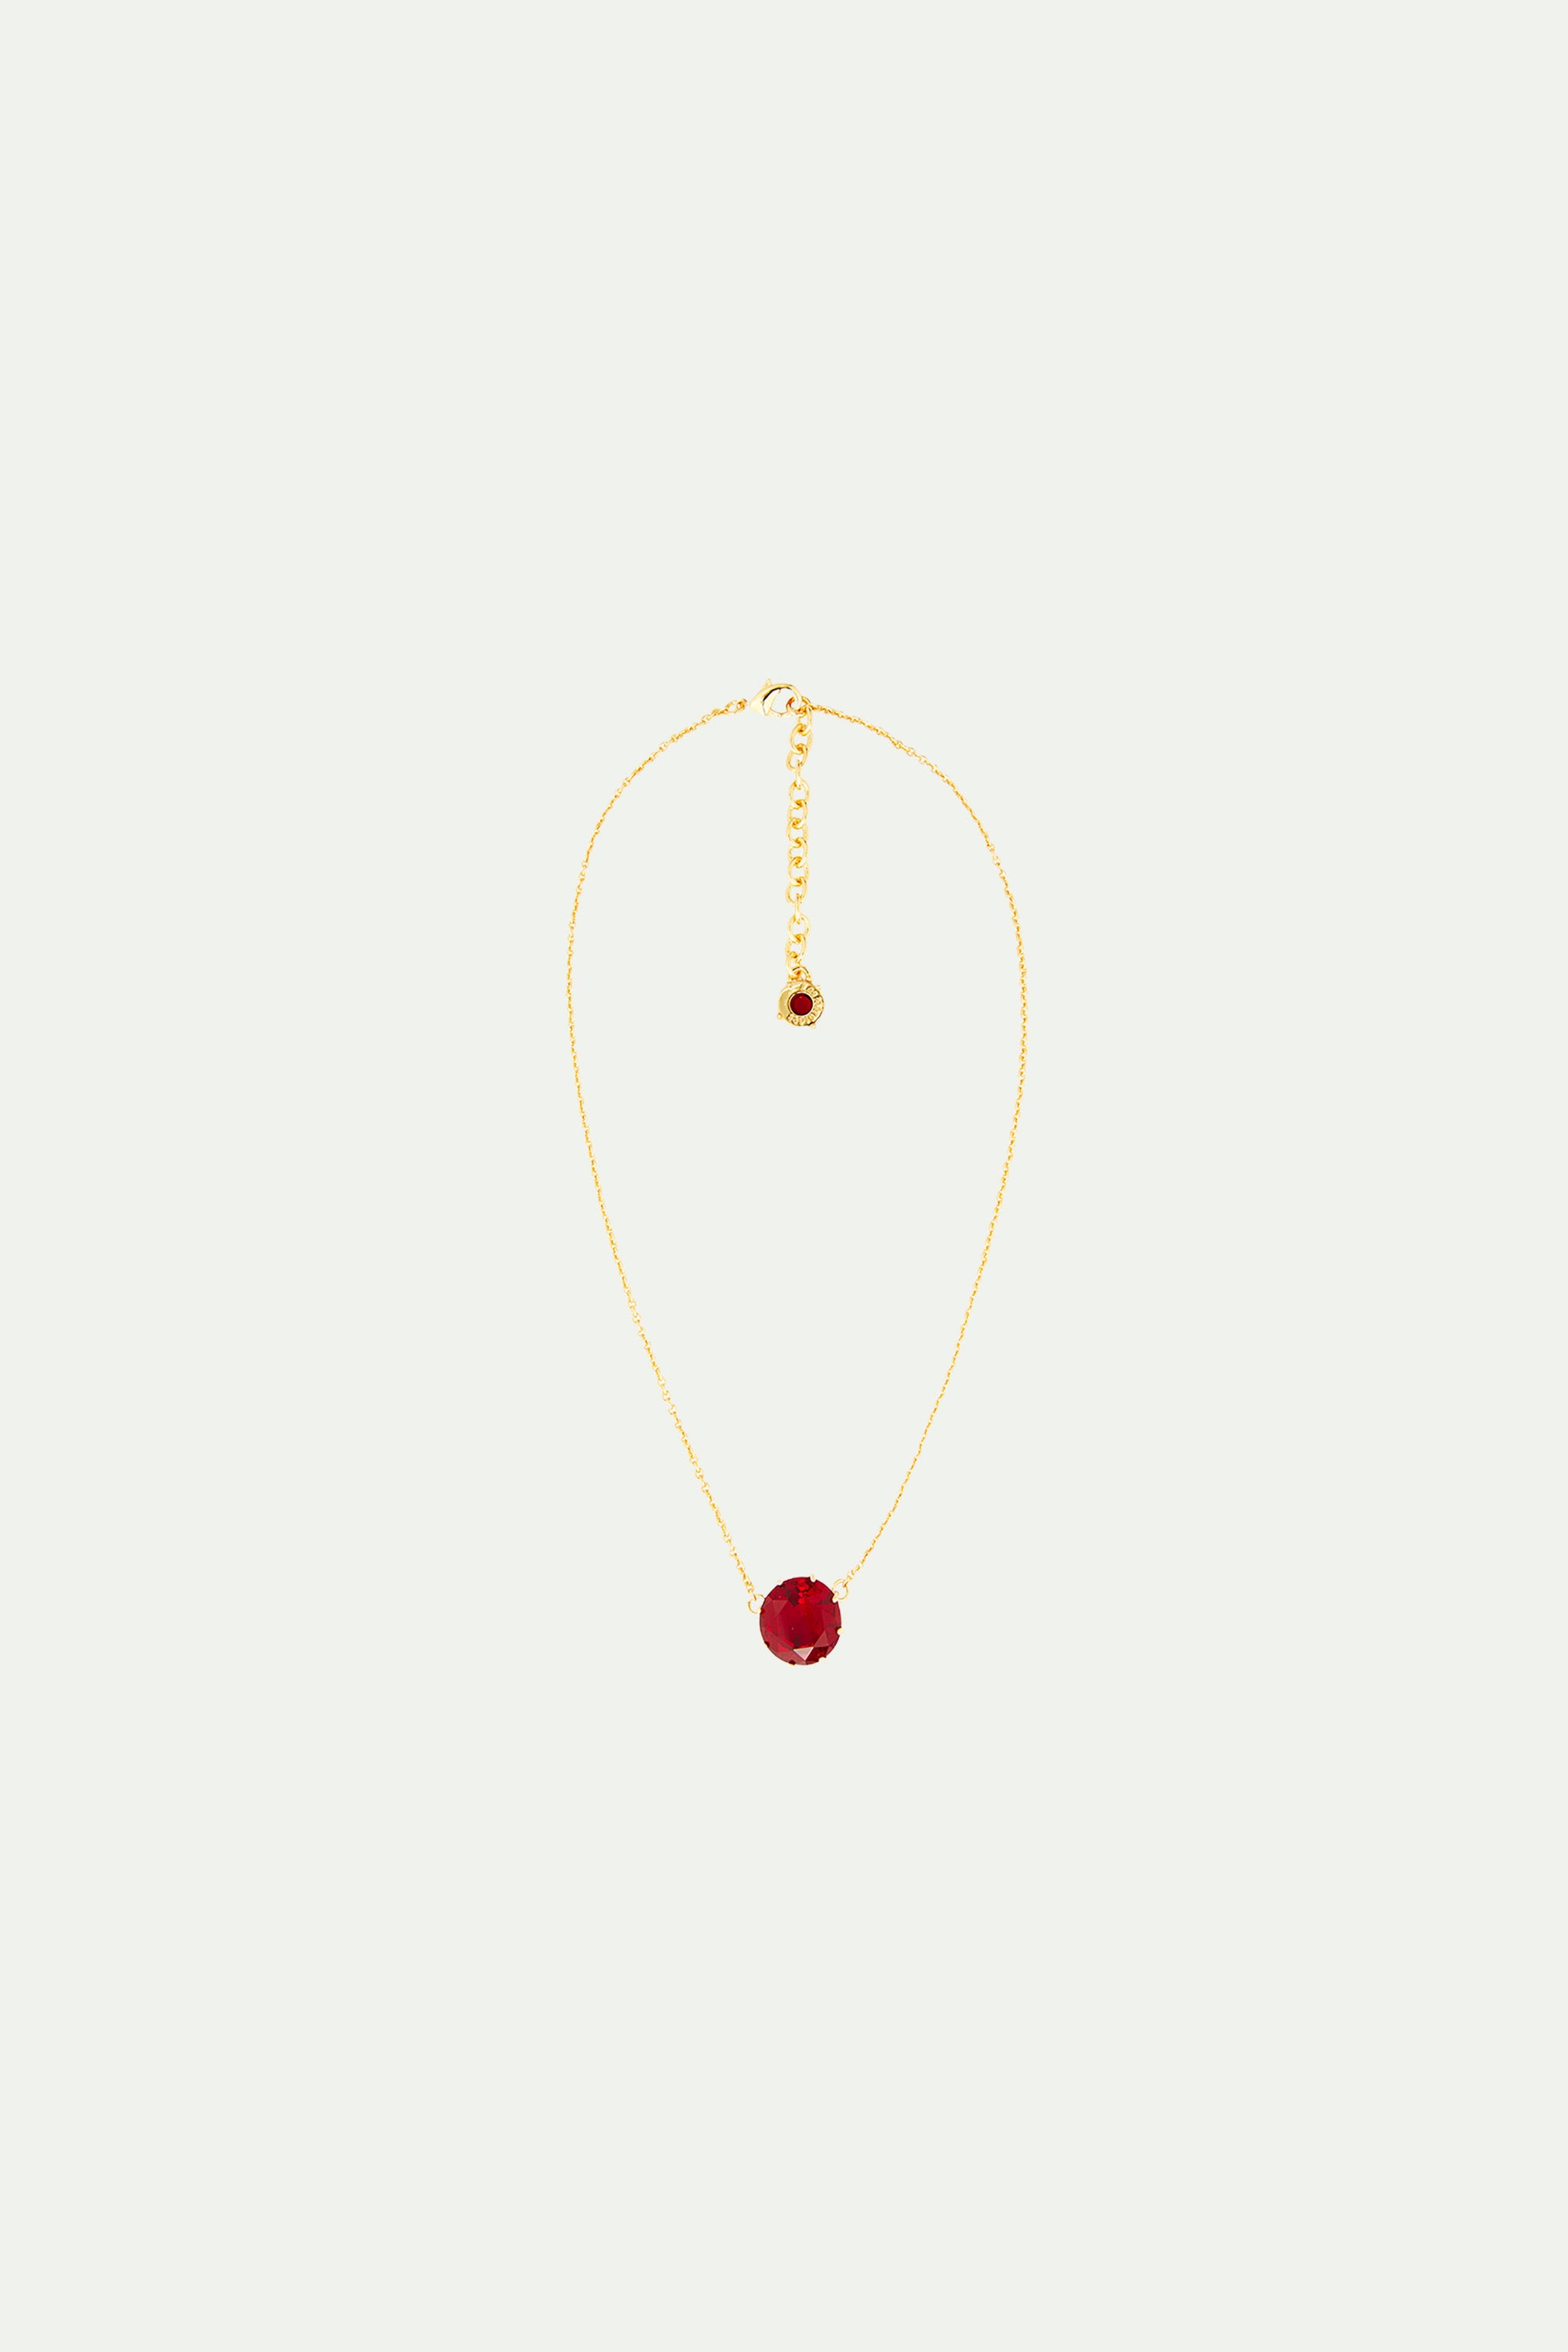 Garnet red diamantine Round pendant necklace